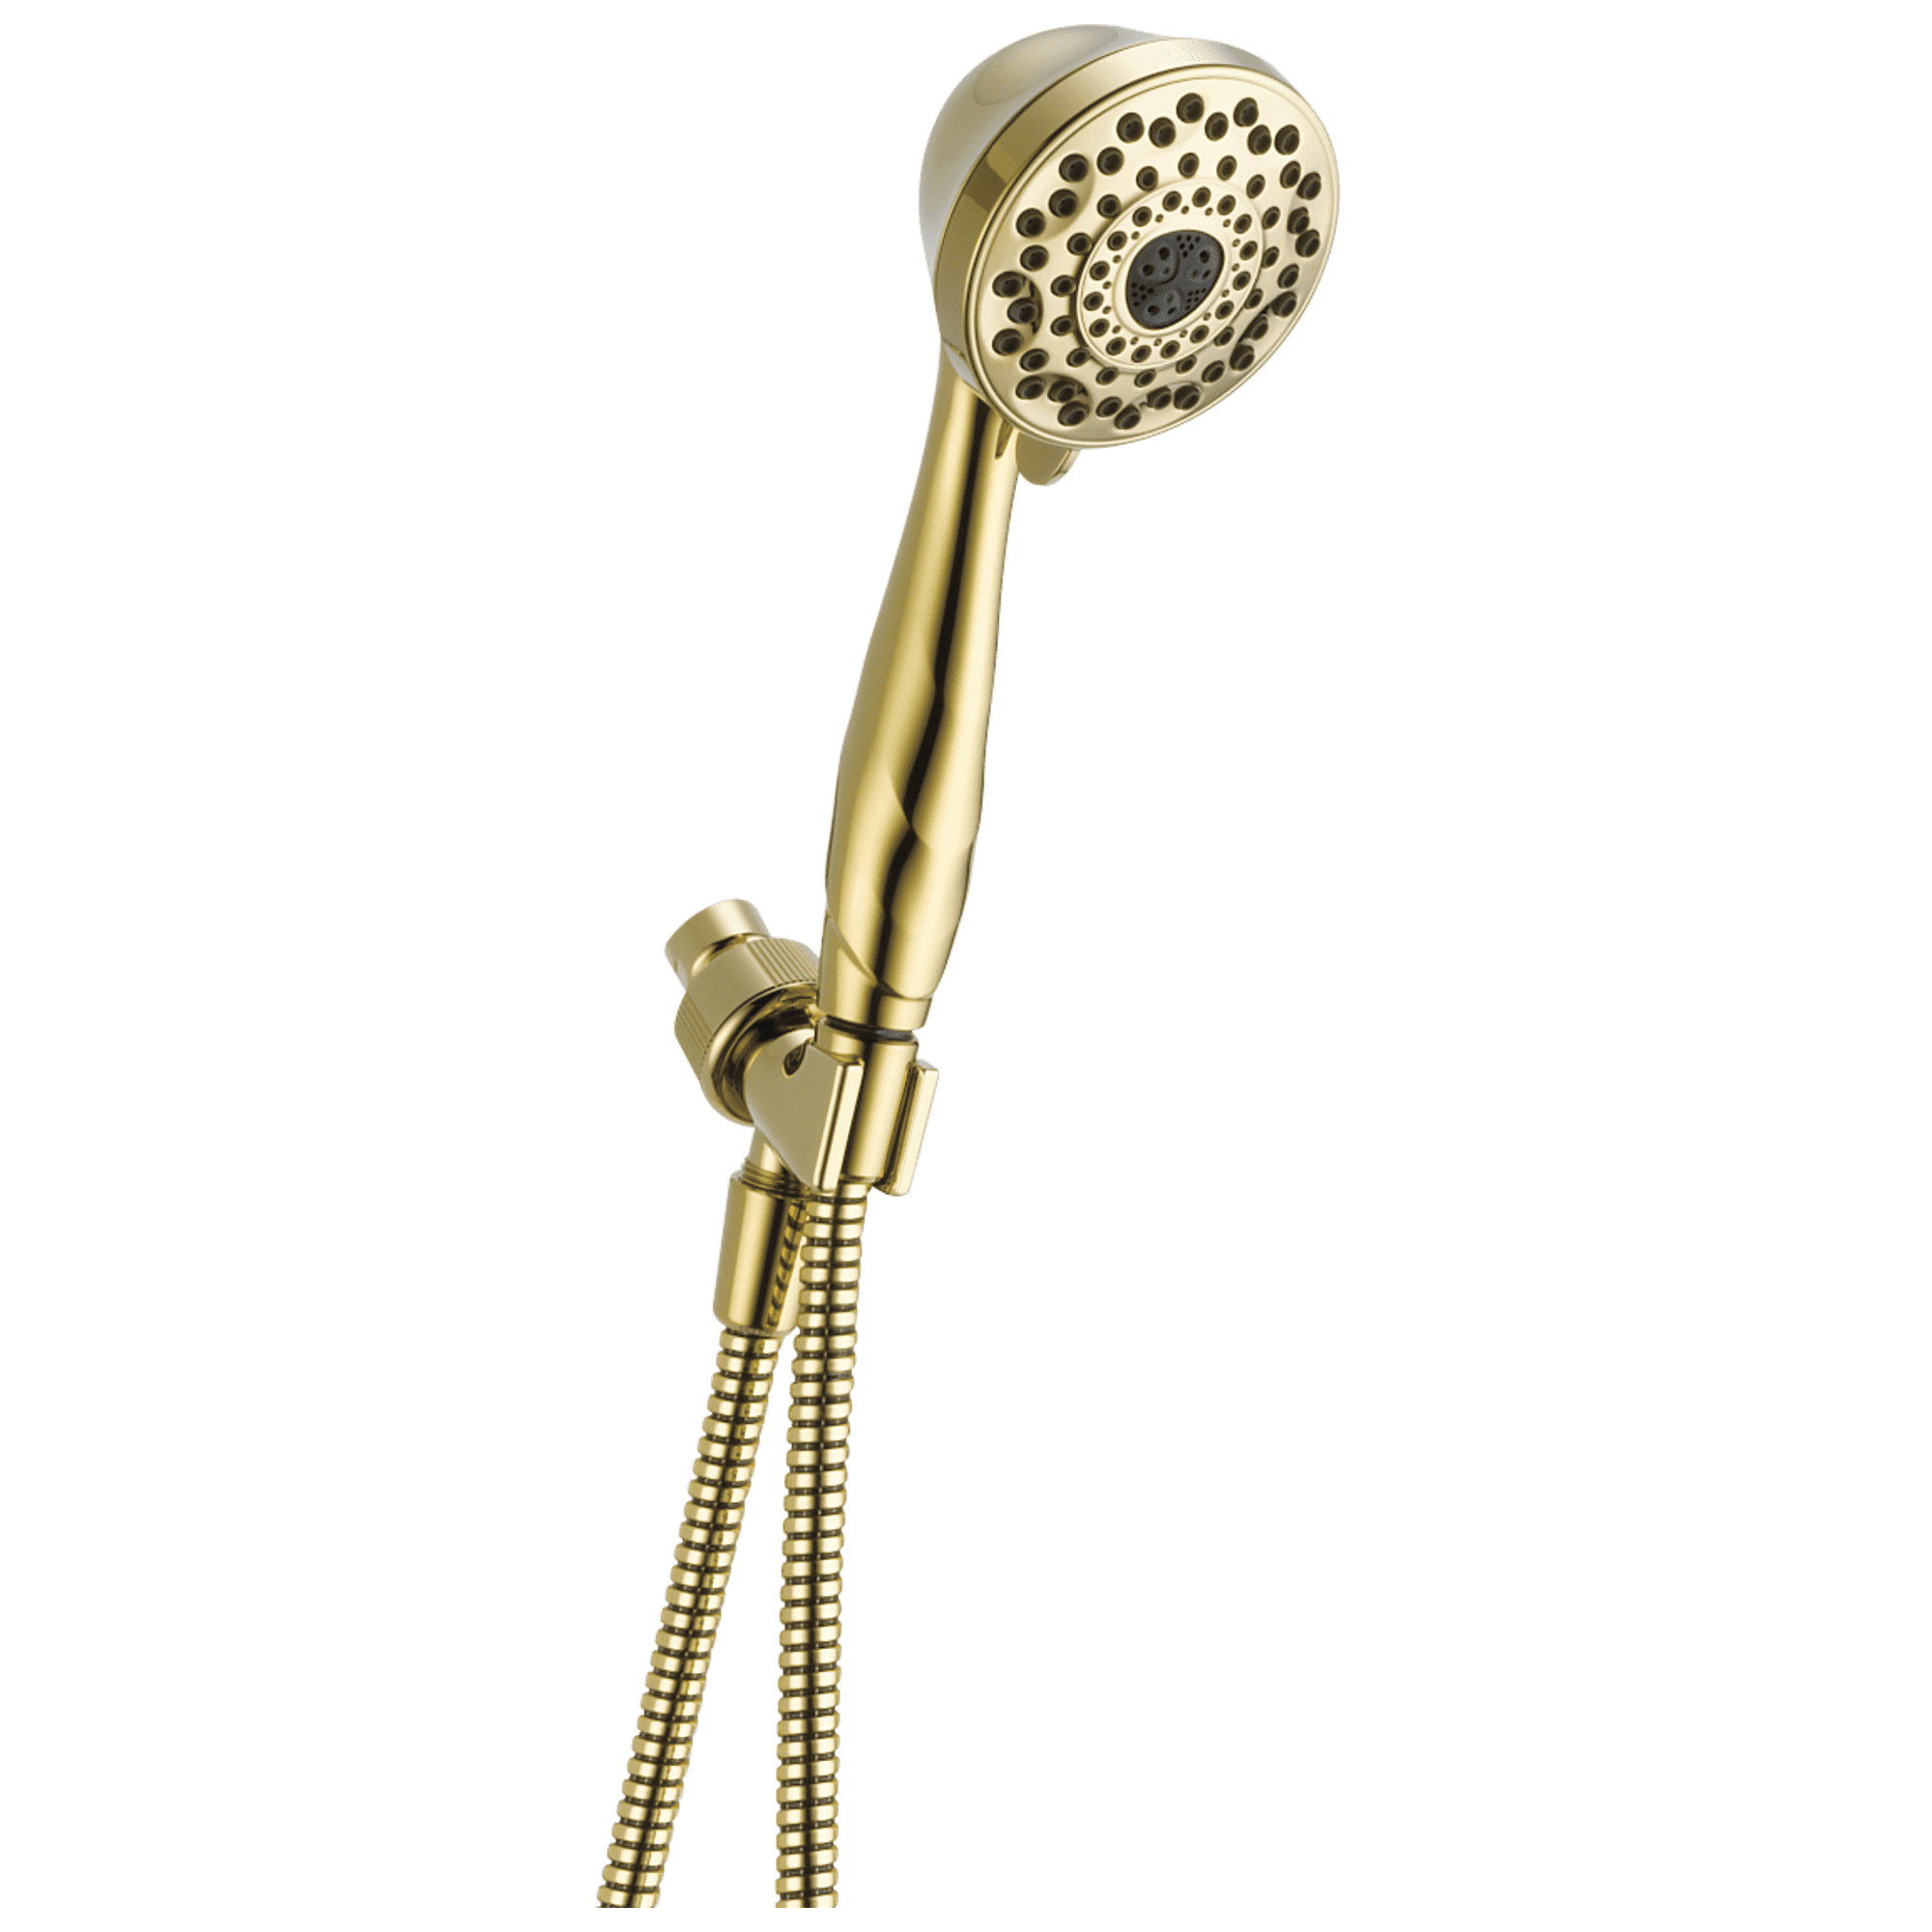 59346-pb-pk Polished Brass 7-setting Shower Arm Mount Hand Shower